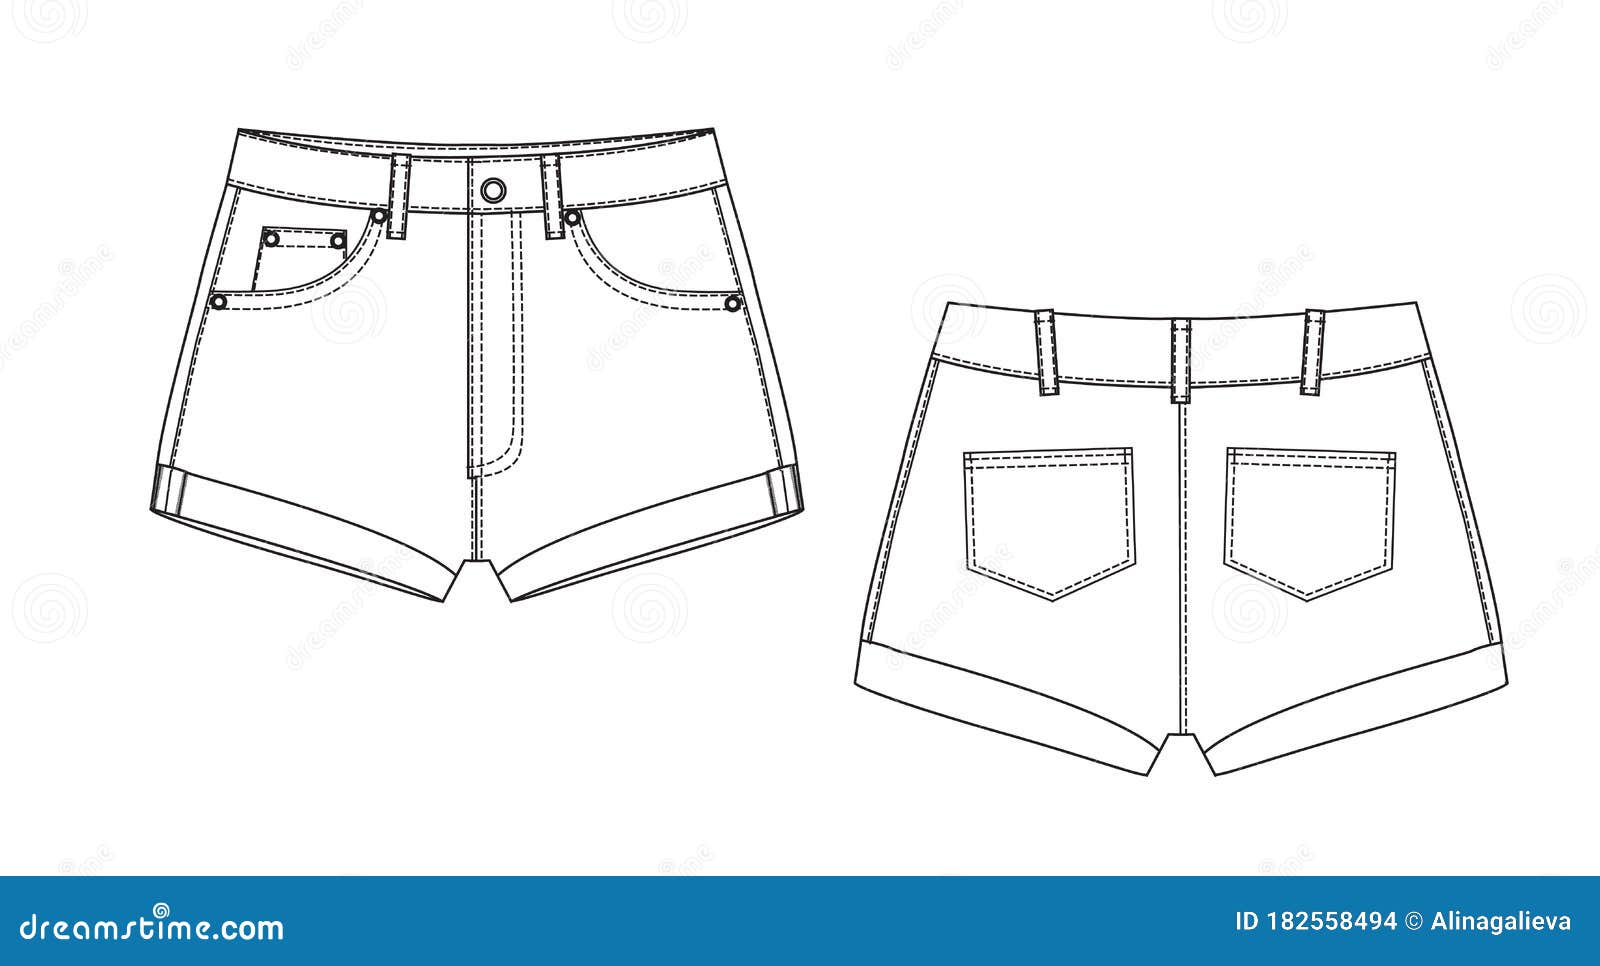 3600 Short Pants Illustrations RoyaltyFree Vector Graphics  Clip Art   iStock  Man short pants Short pants kid Man with short pants